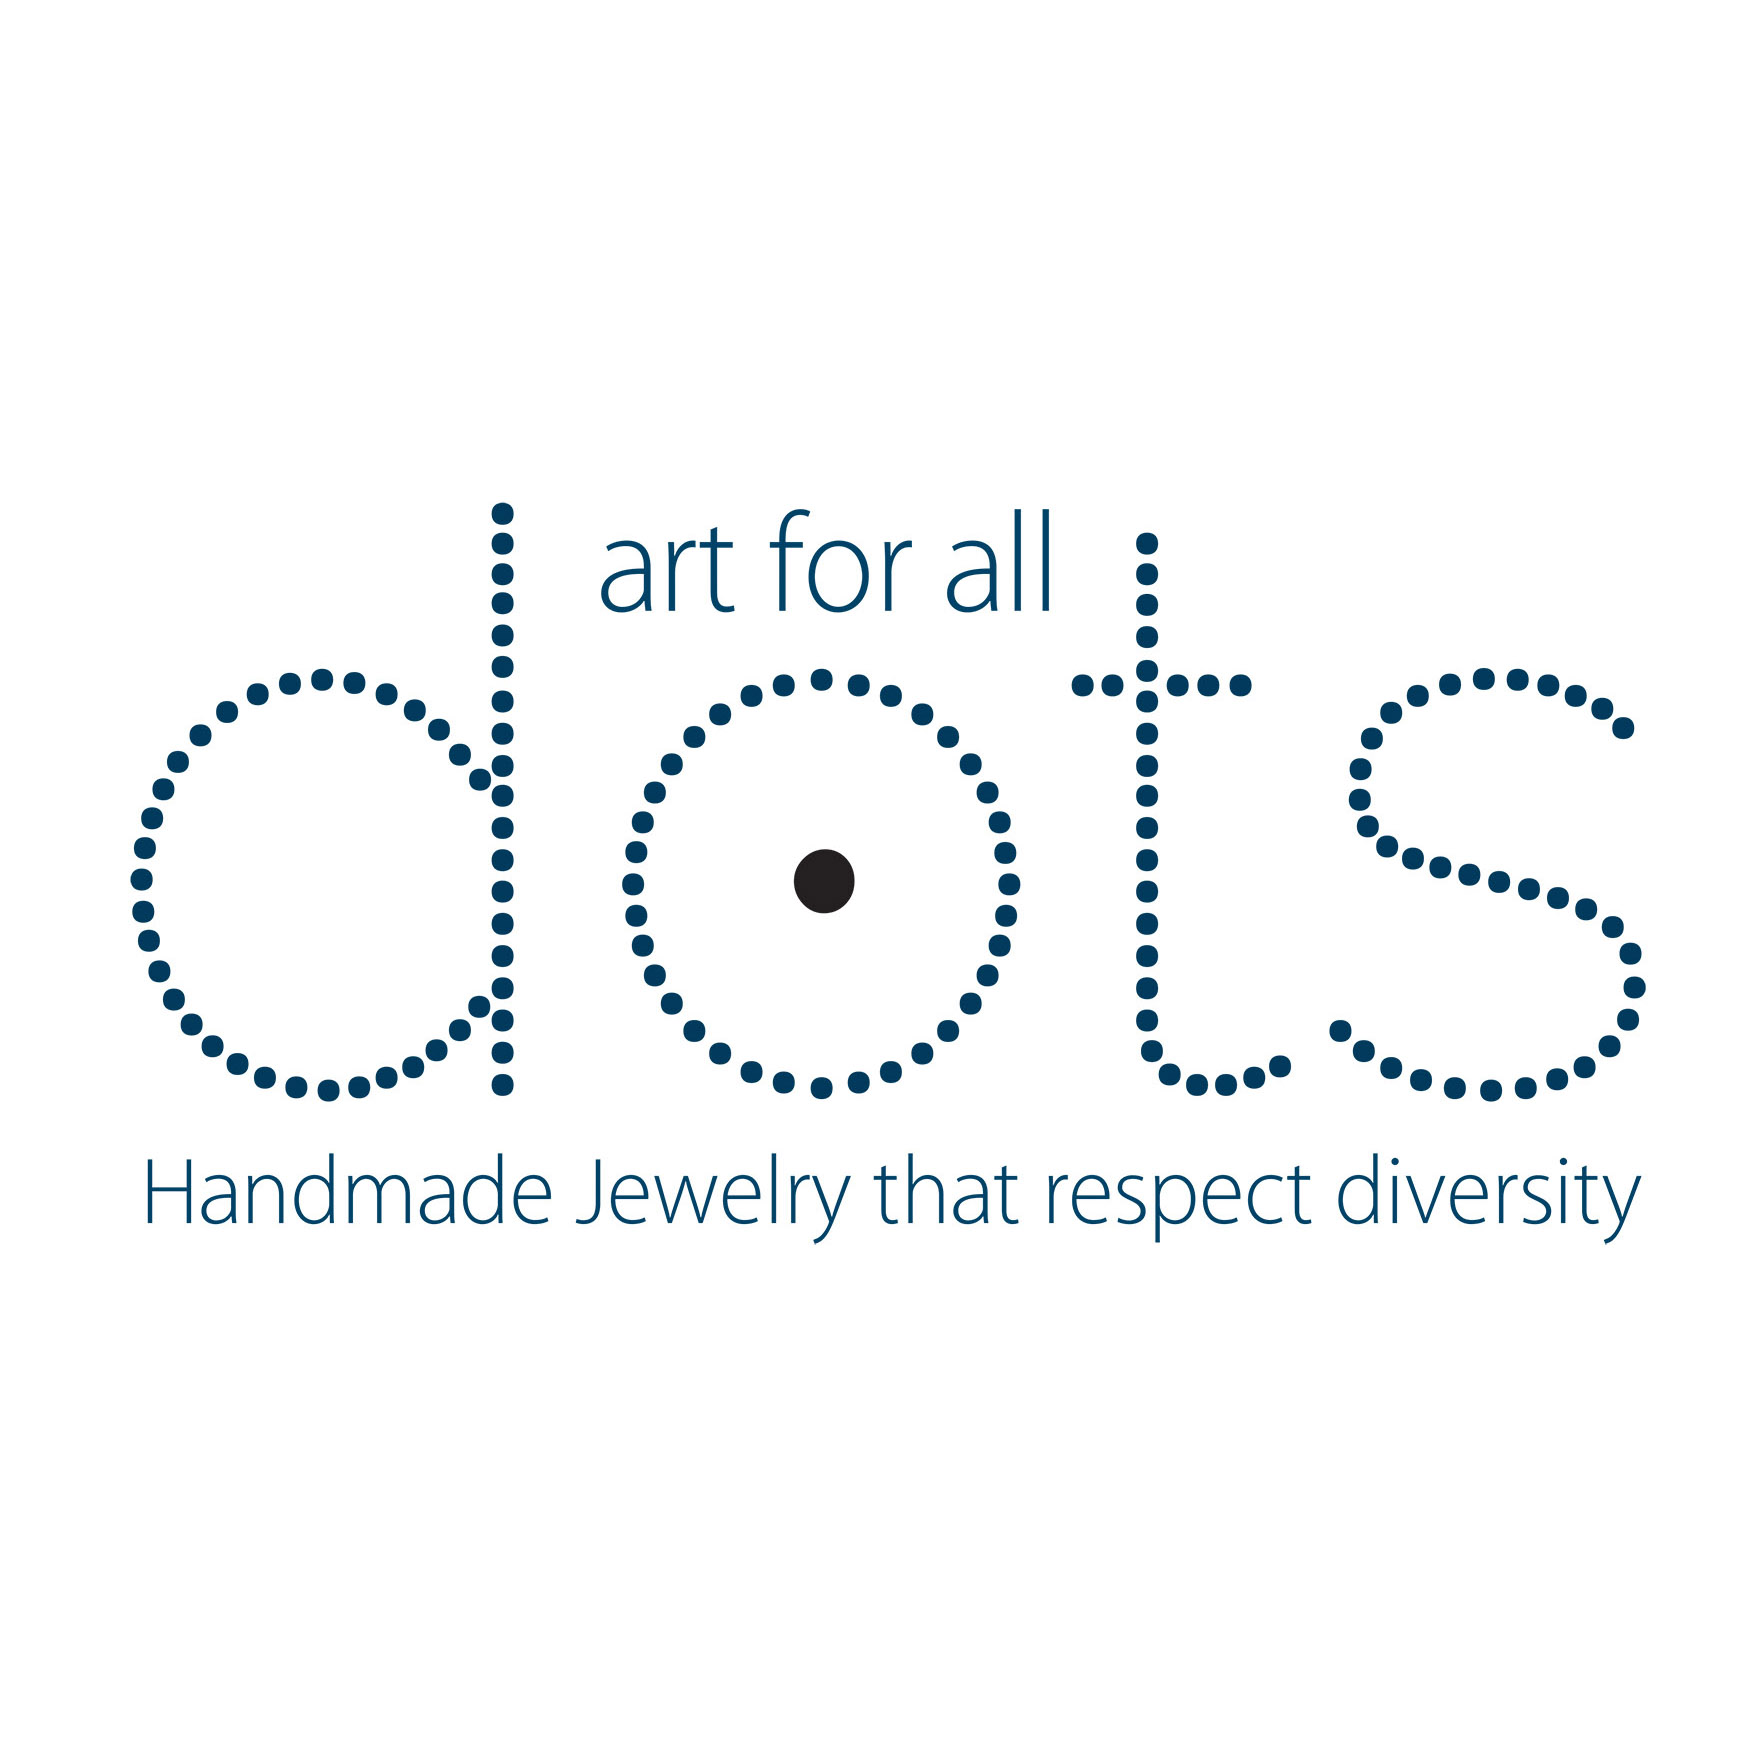 dots Logo